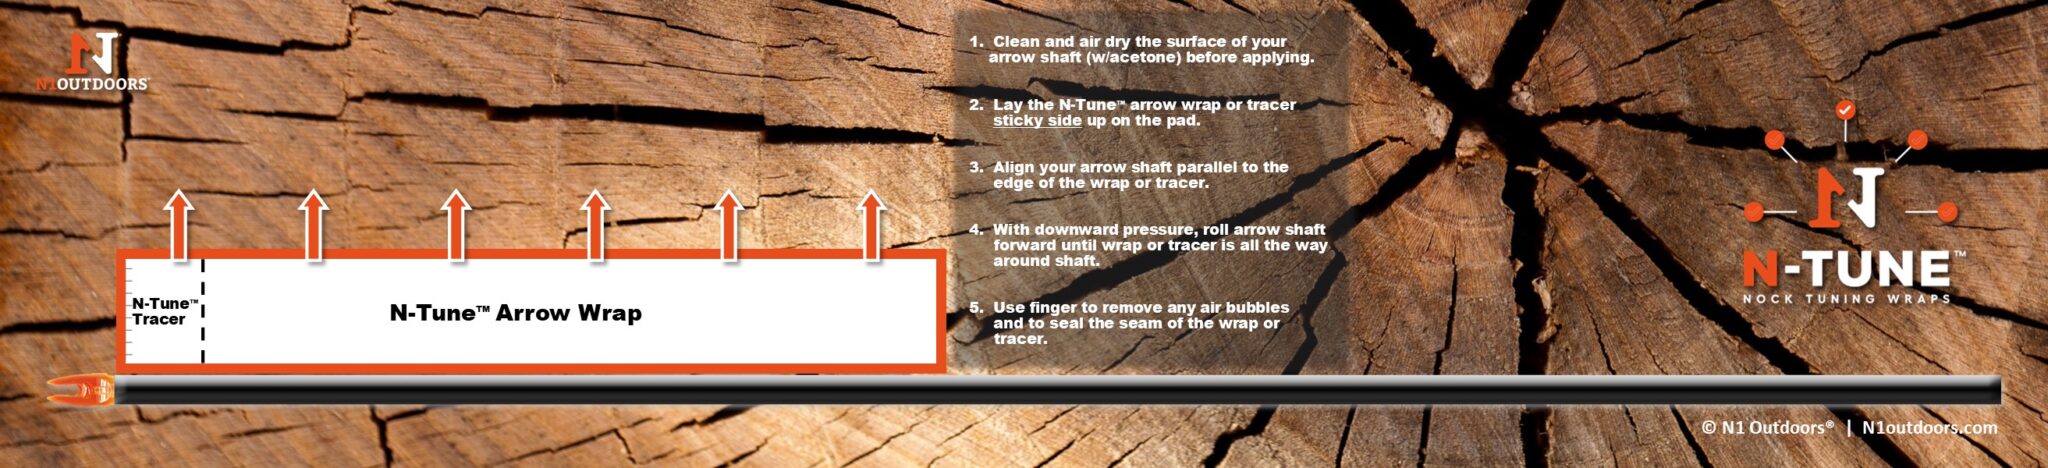 N-Tune arrow wrap pad lumber design